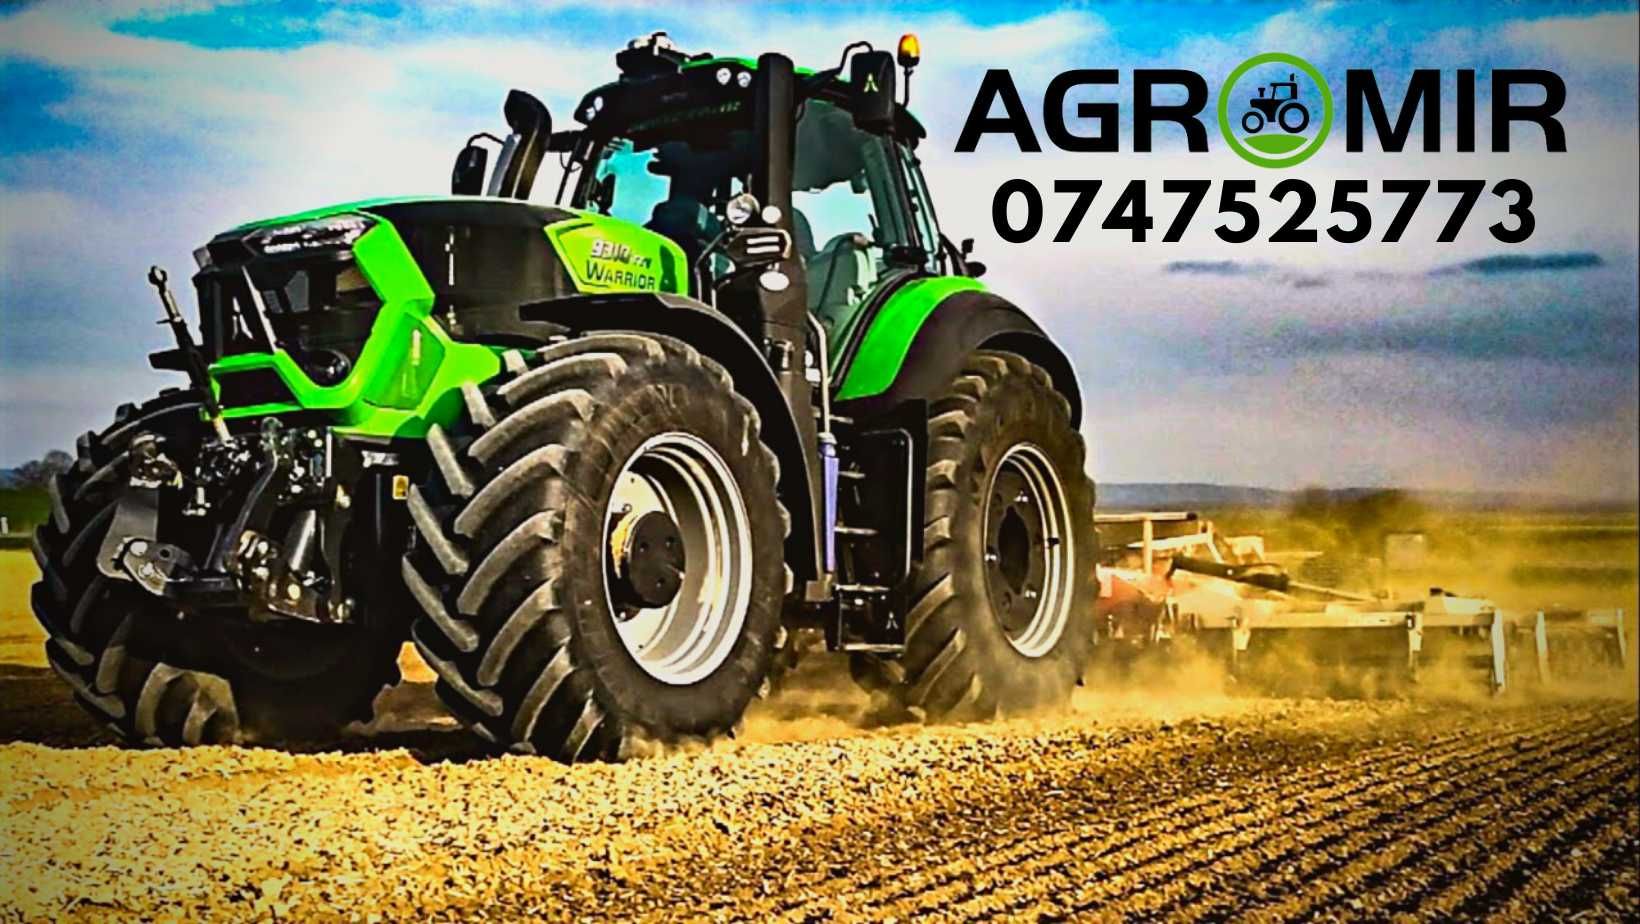 Cauciucuri noi 8.3-32 OZKA 8PR anvelope agricole de tractor garantie